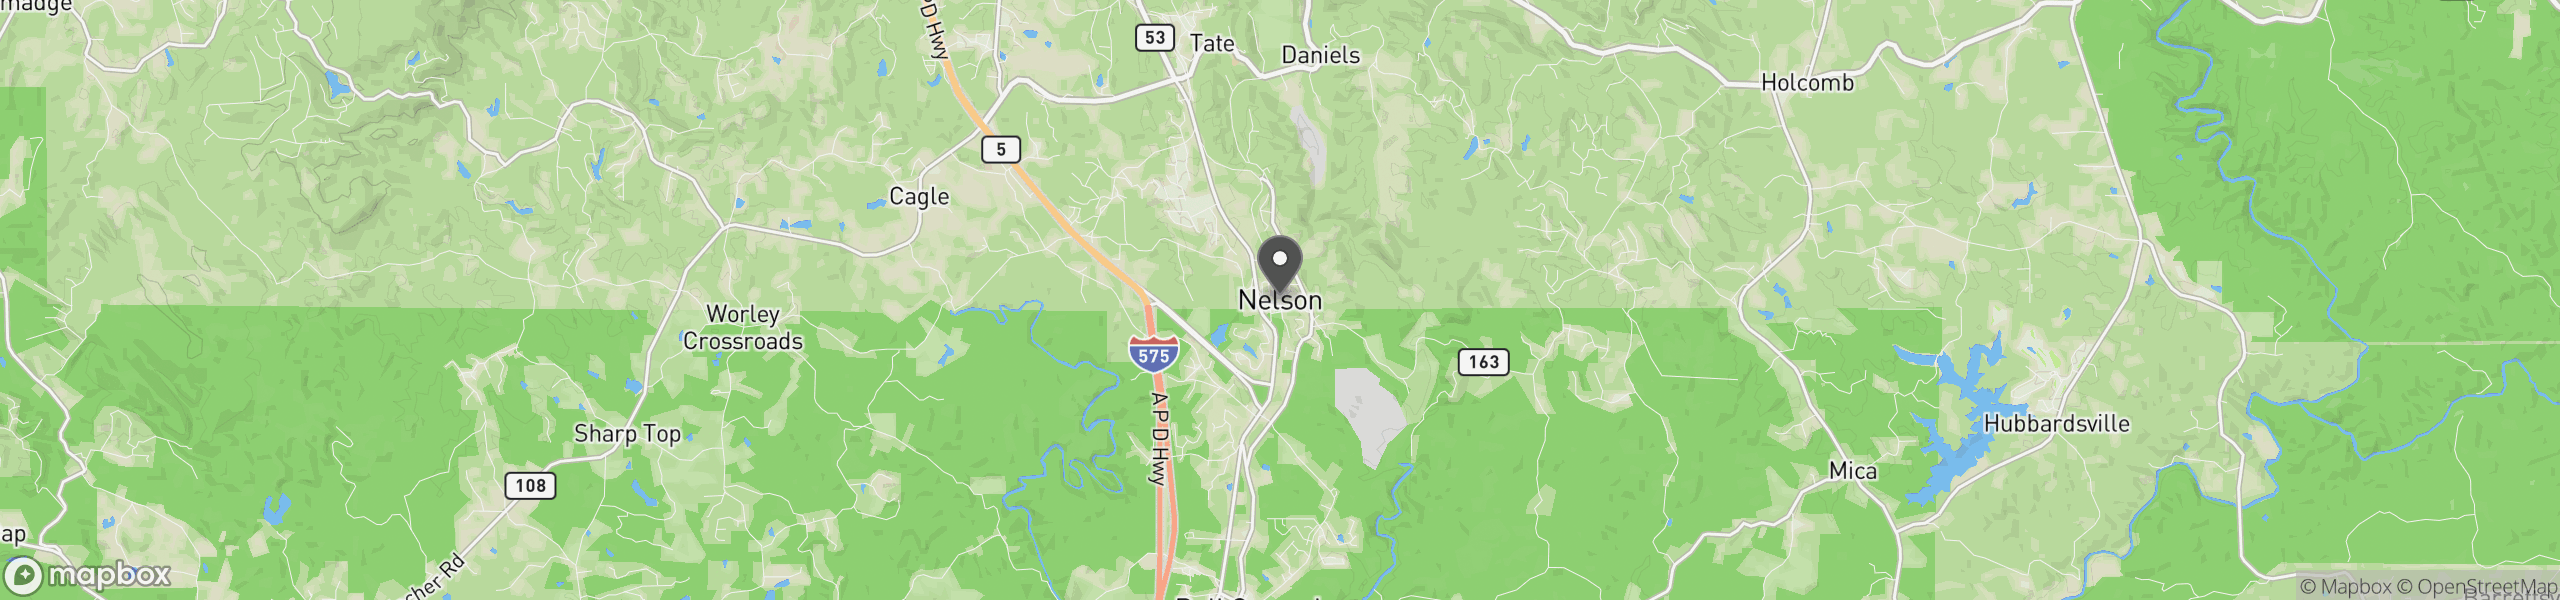 Nelson, GA 30151